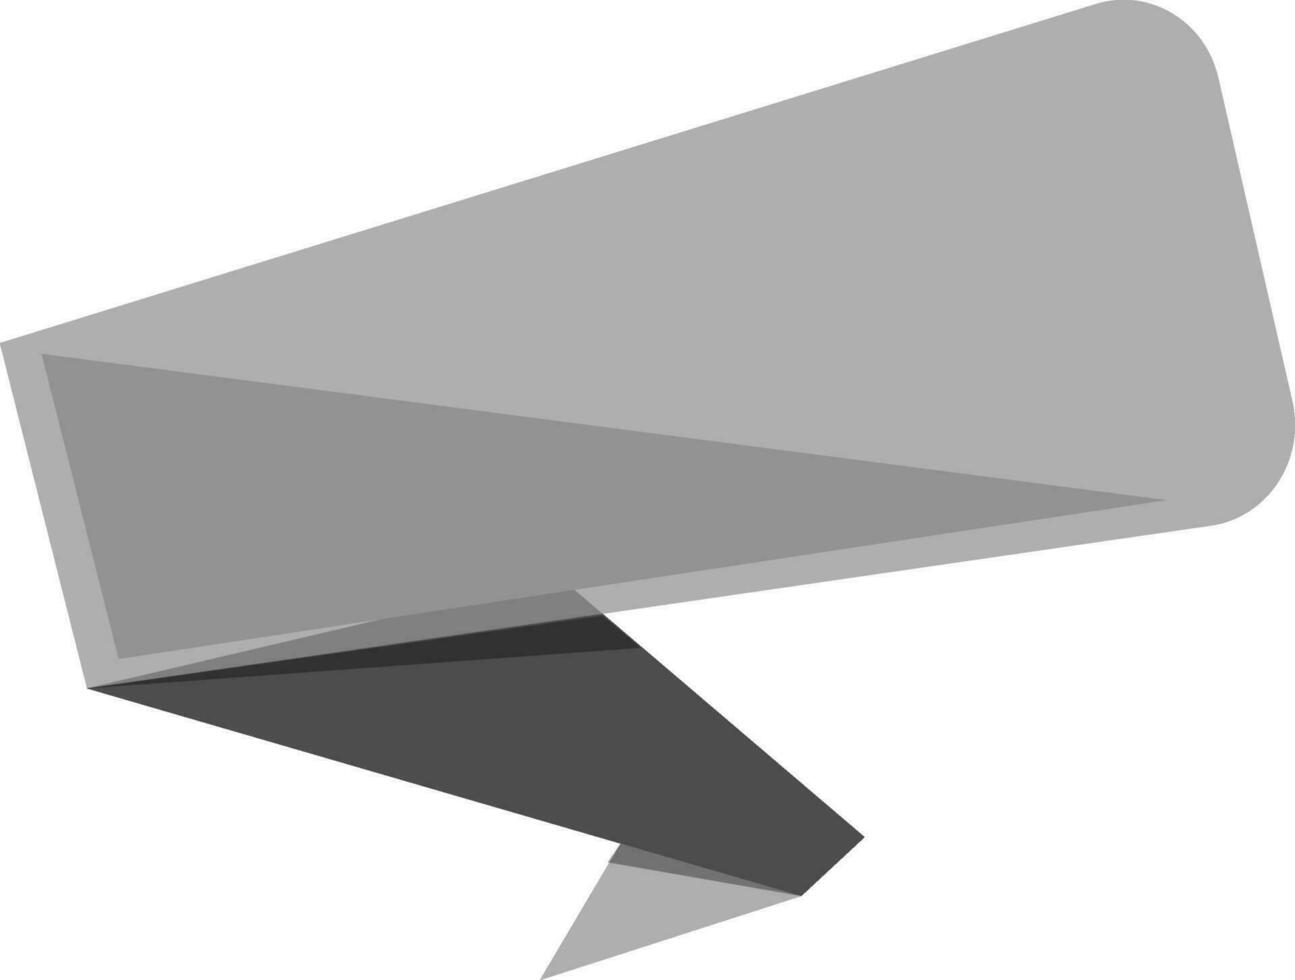 Illustration of a blank ribbon. vector